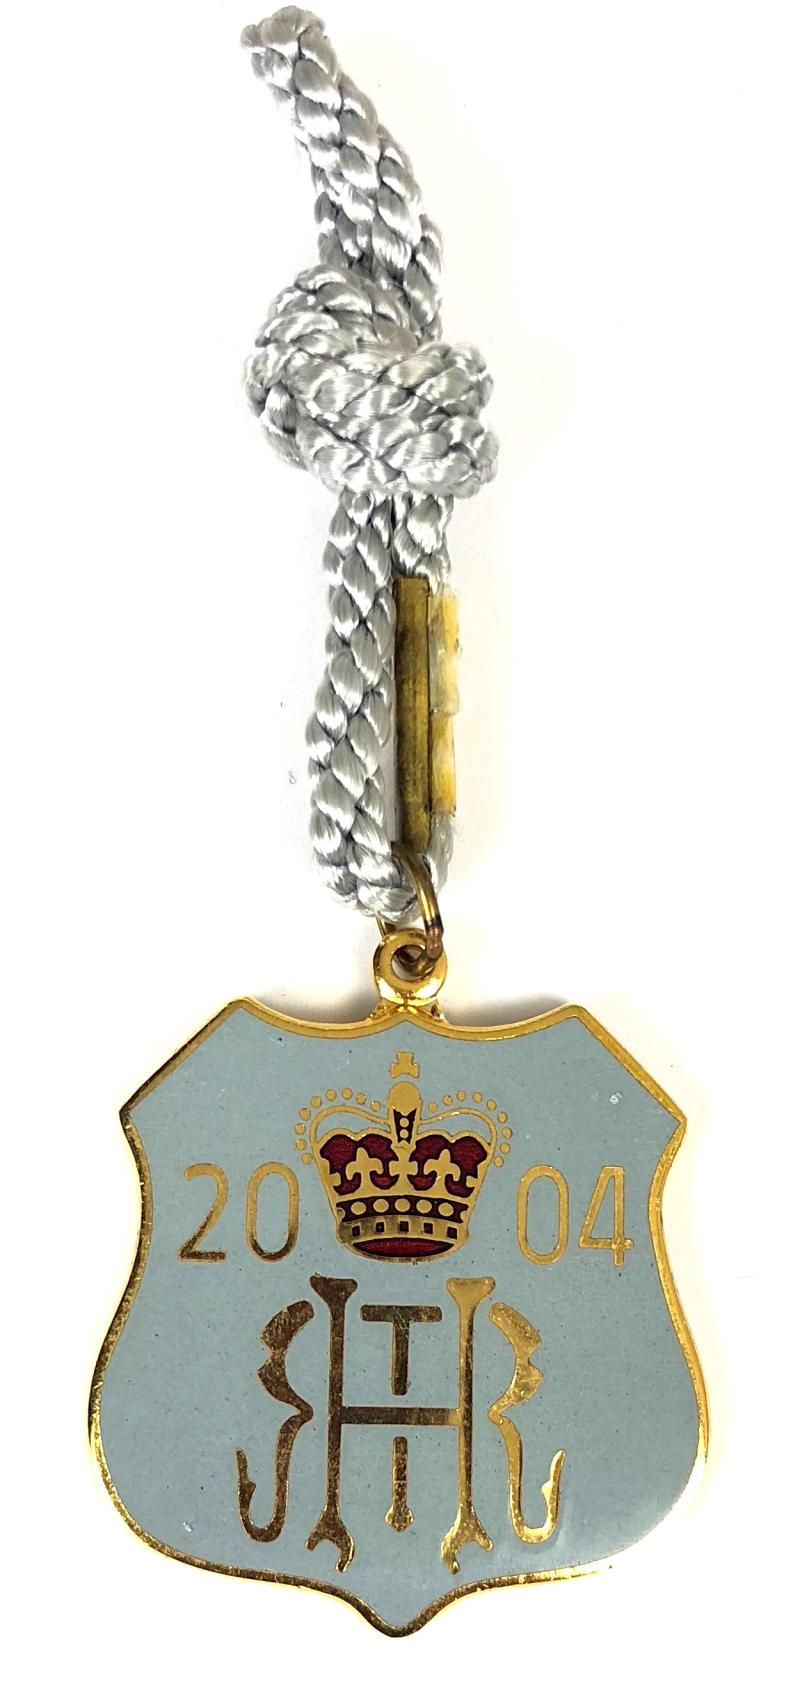 2004 Henley Royal Regatta stewards enclosure badge